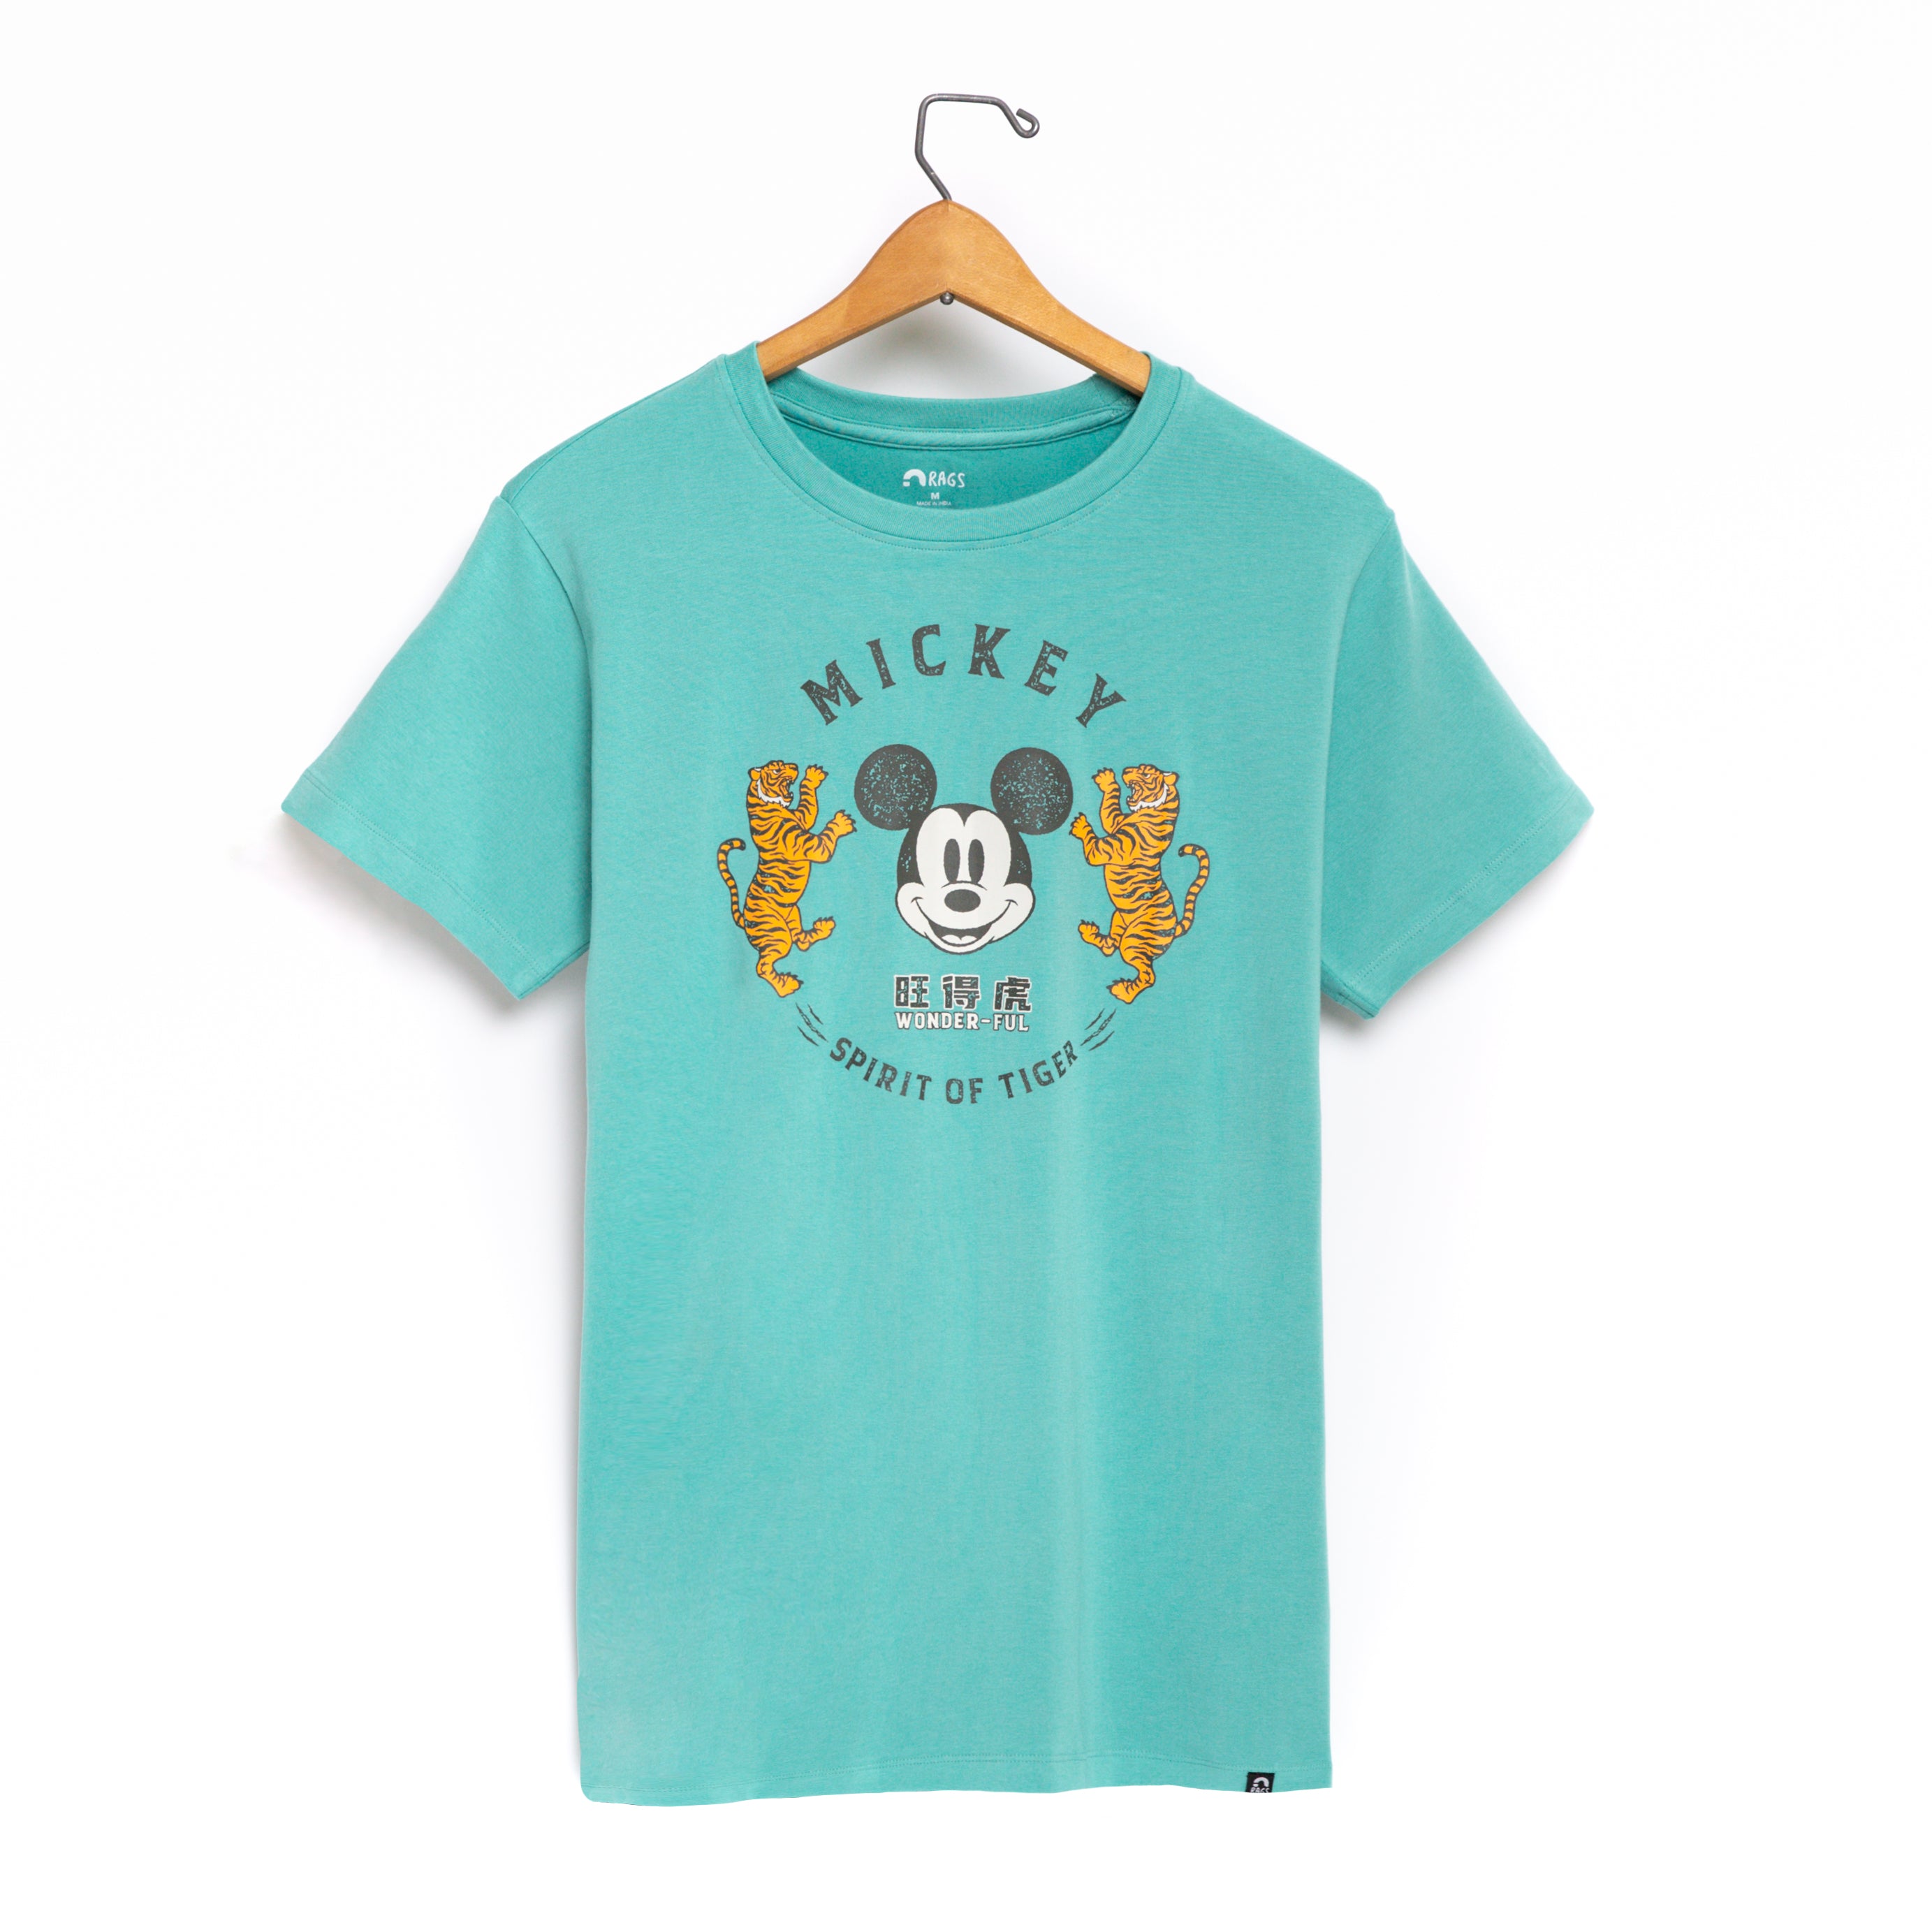 Elsa Women's Tee | Adult Disney Frozen Clothes & T-Shirts |  ·